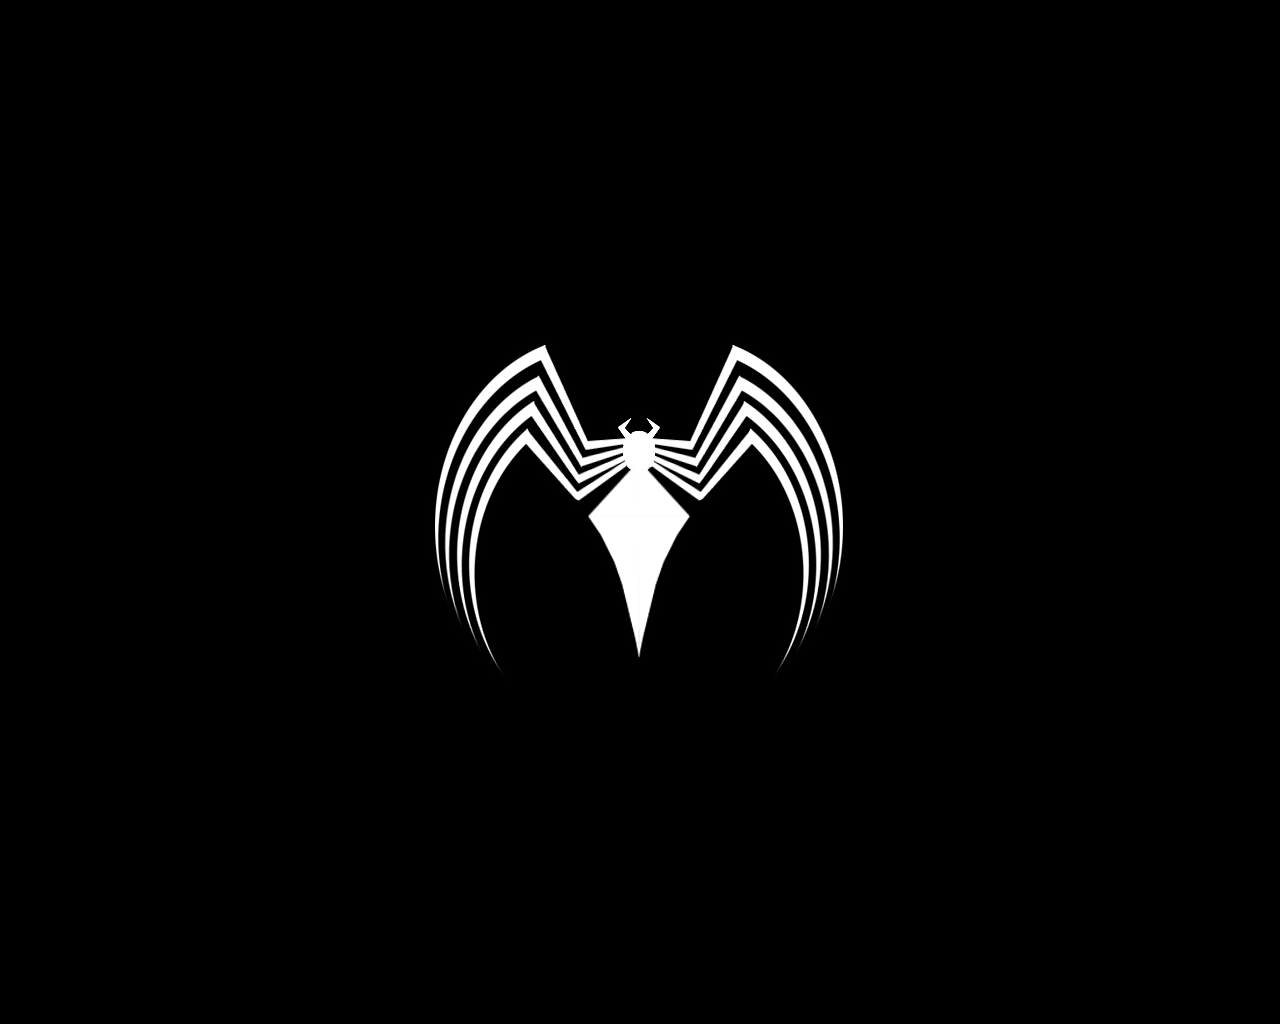 Venom Logo Wallpaper. Marvel: Evil Villain Or Anti Hero